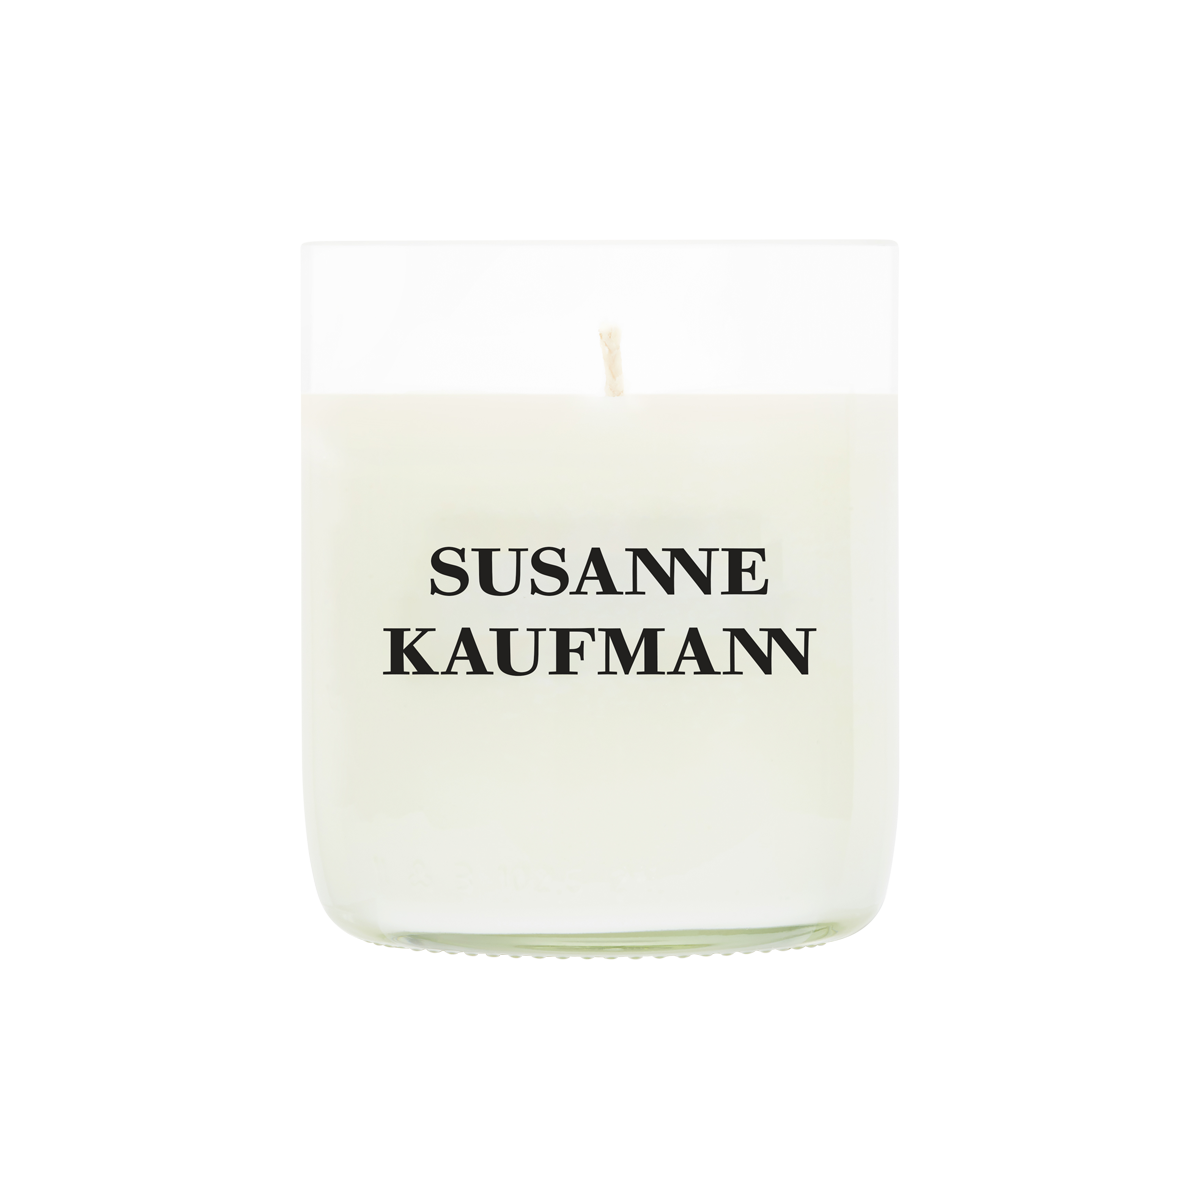 Susanne Kaufmann - Balancing Candle